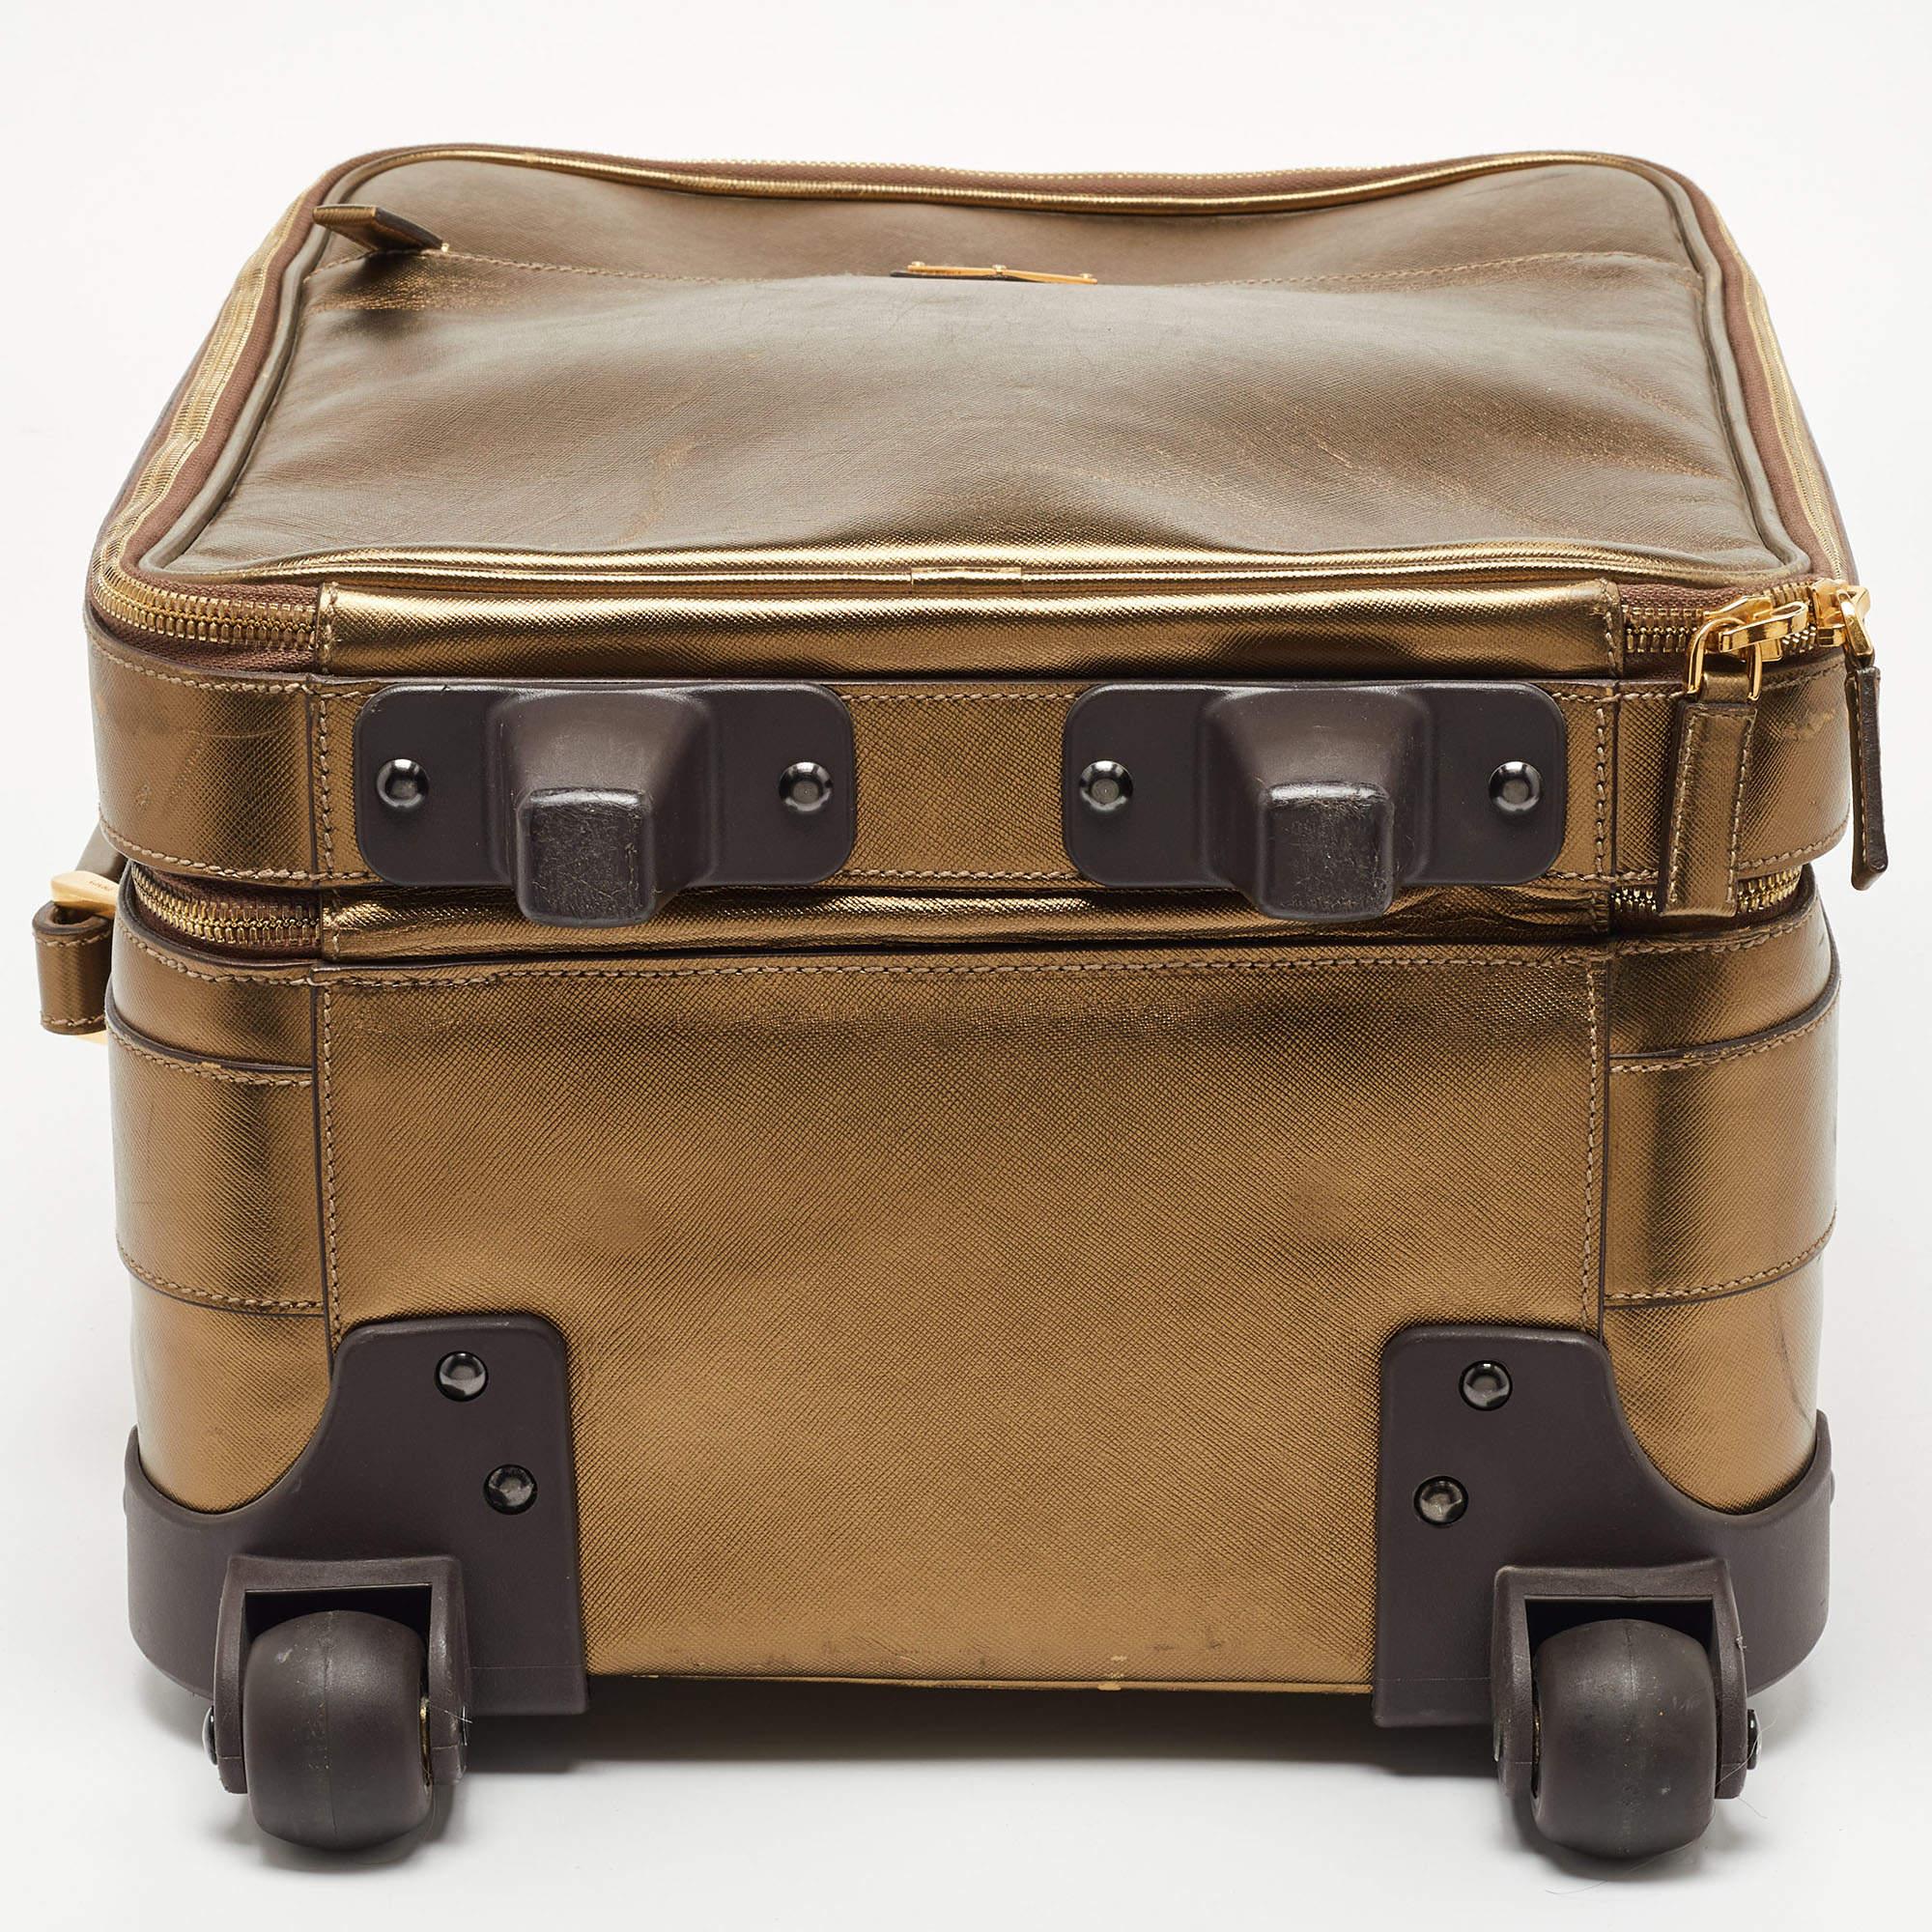 Prada Metallic Gold Saffiano Leather Travel Rolling Trolley Luggage For Sale 4